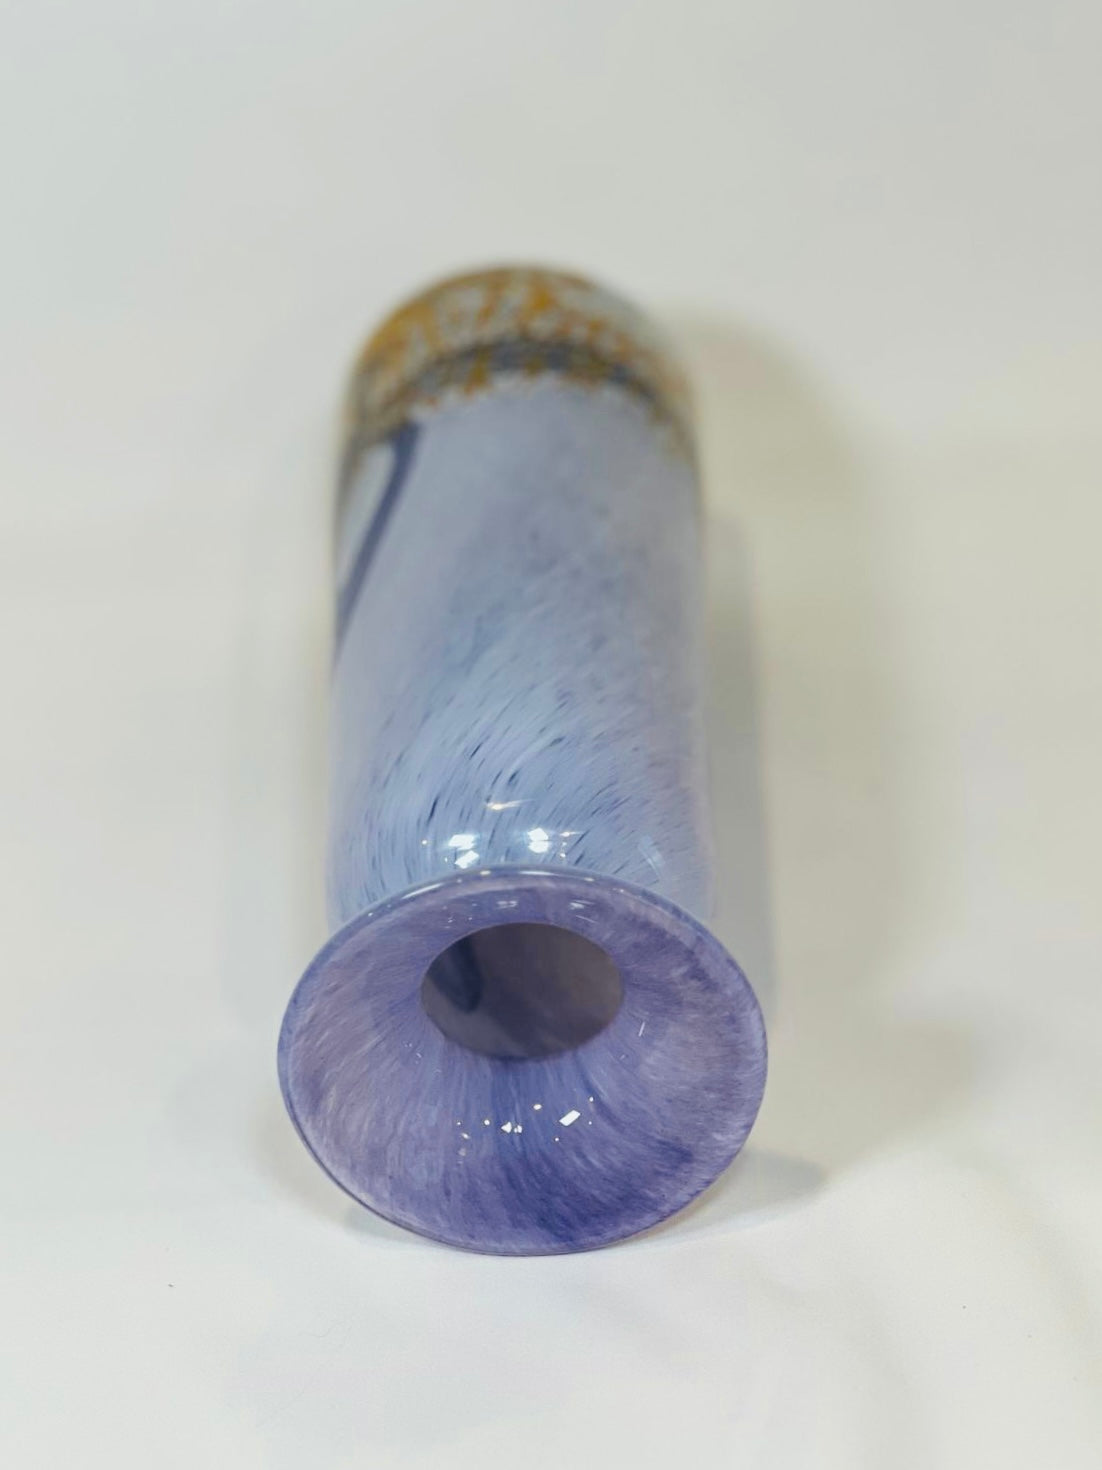 Swedish Glass Vase in Lilac